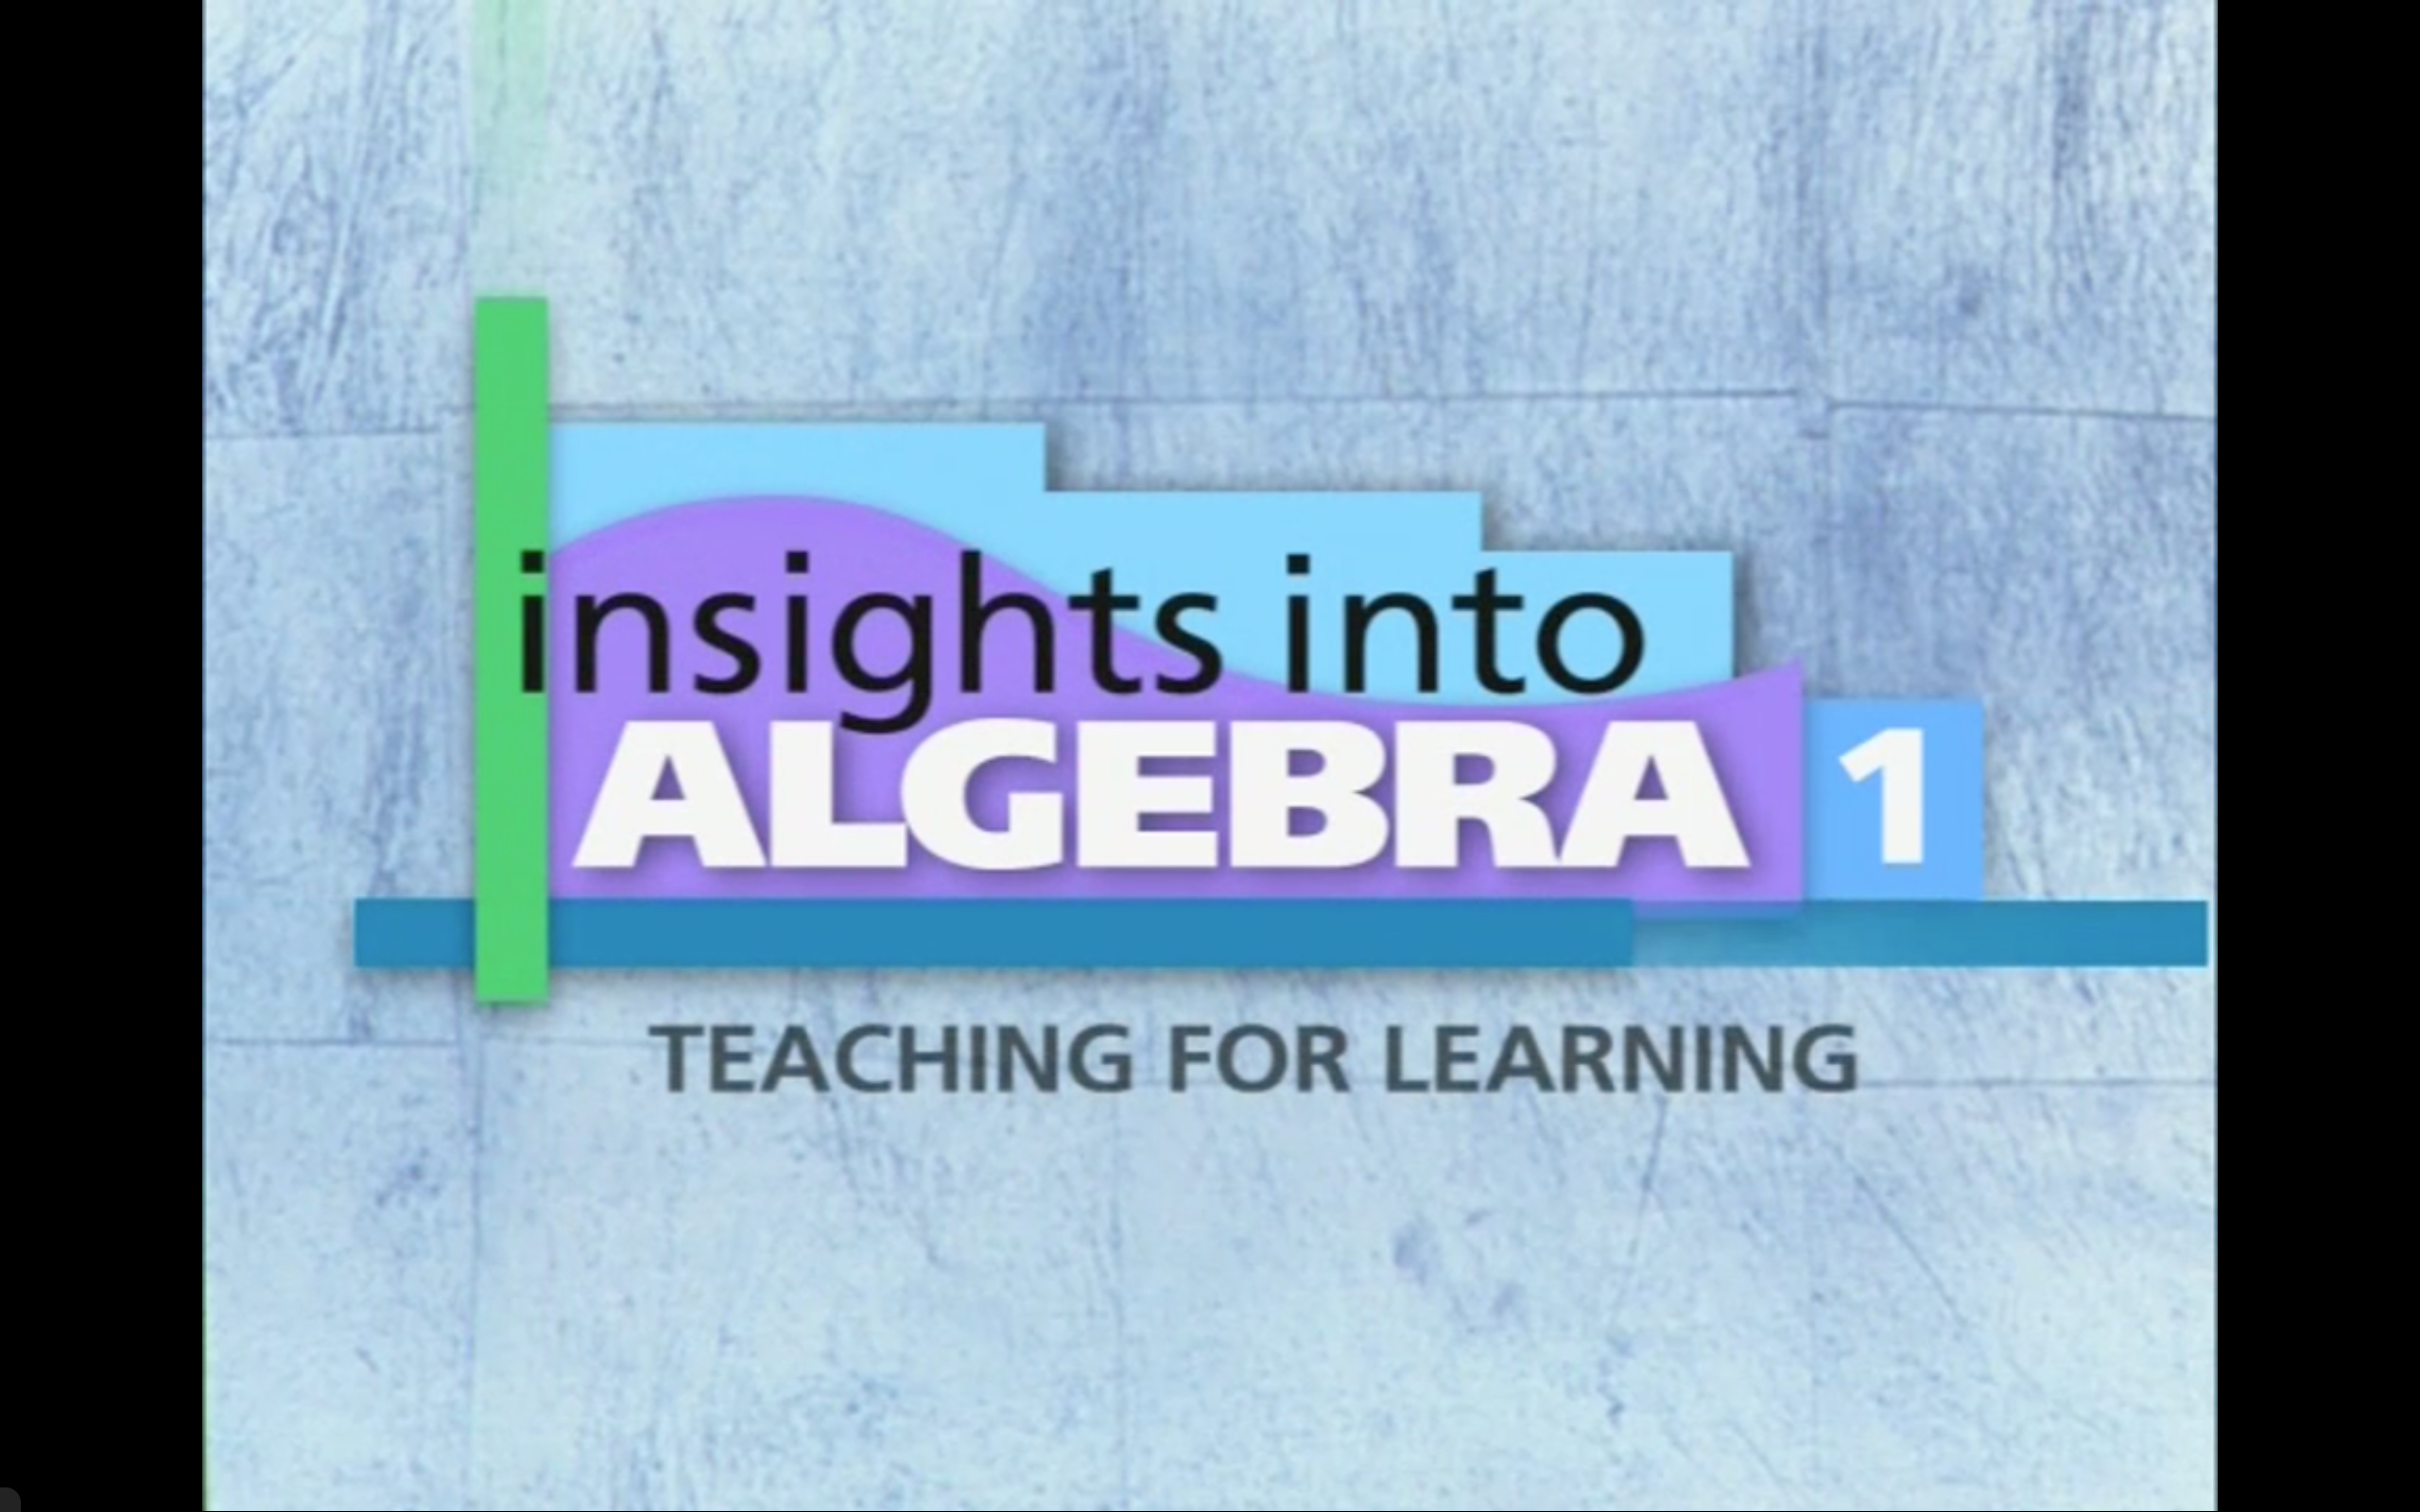 algebra 1 wallpaper